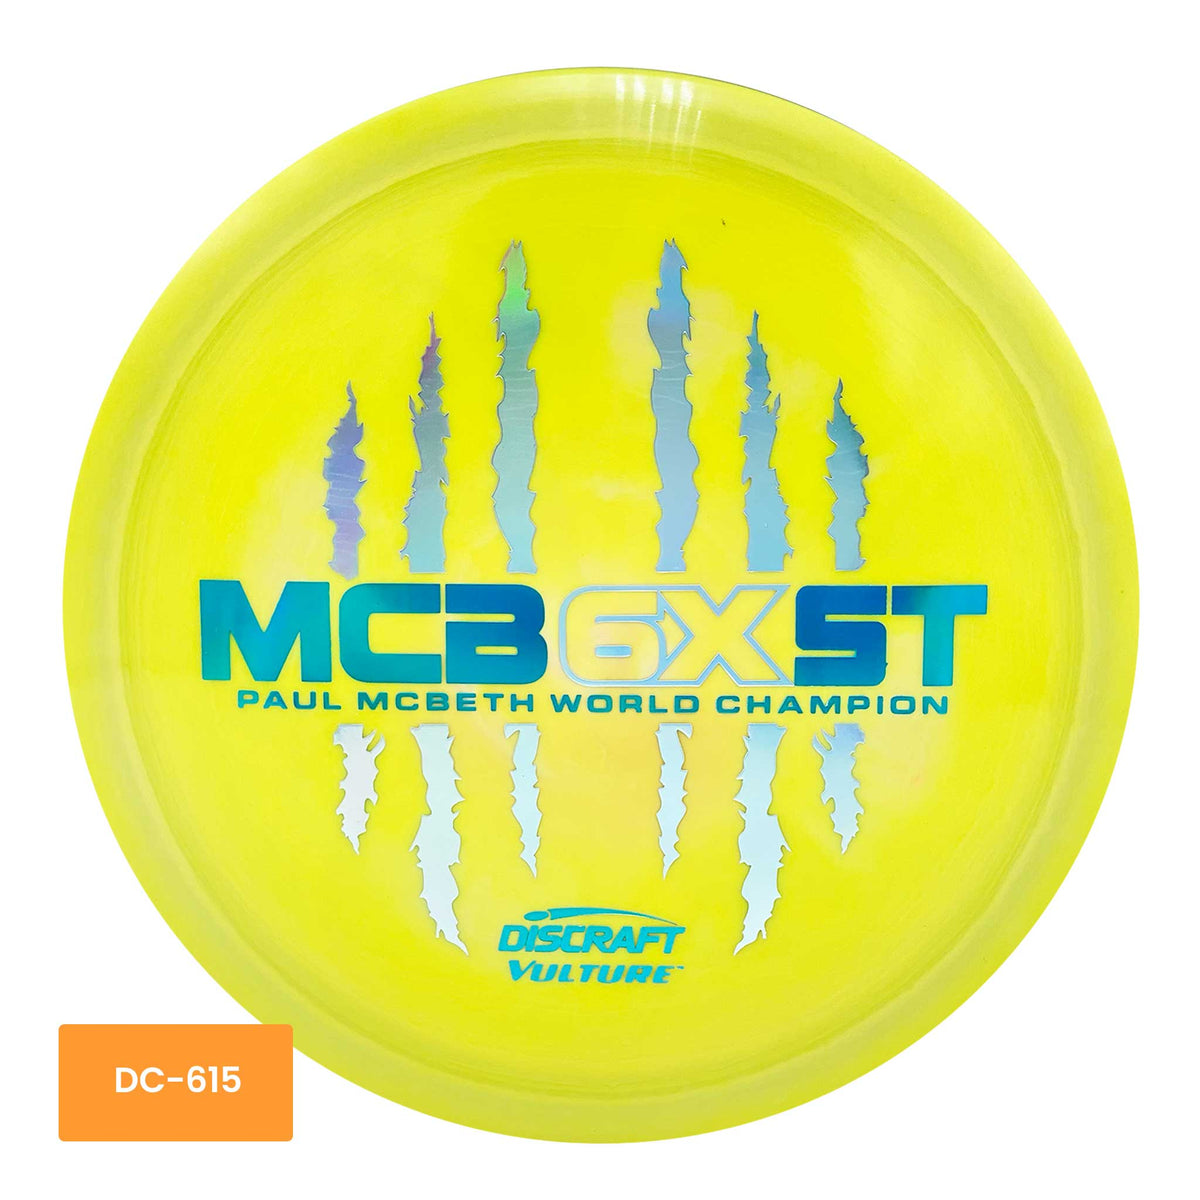 Discraft Paul McBeth MCB6SXT ESP Vulture distance driver - Yellow